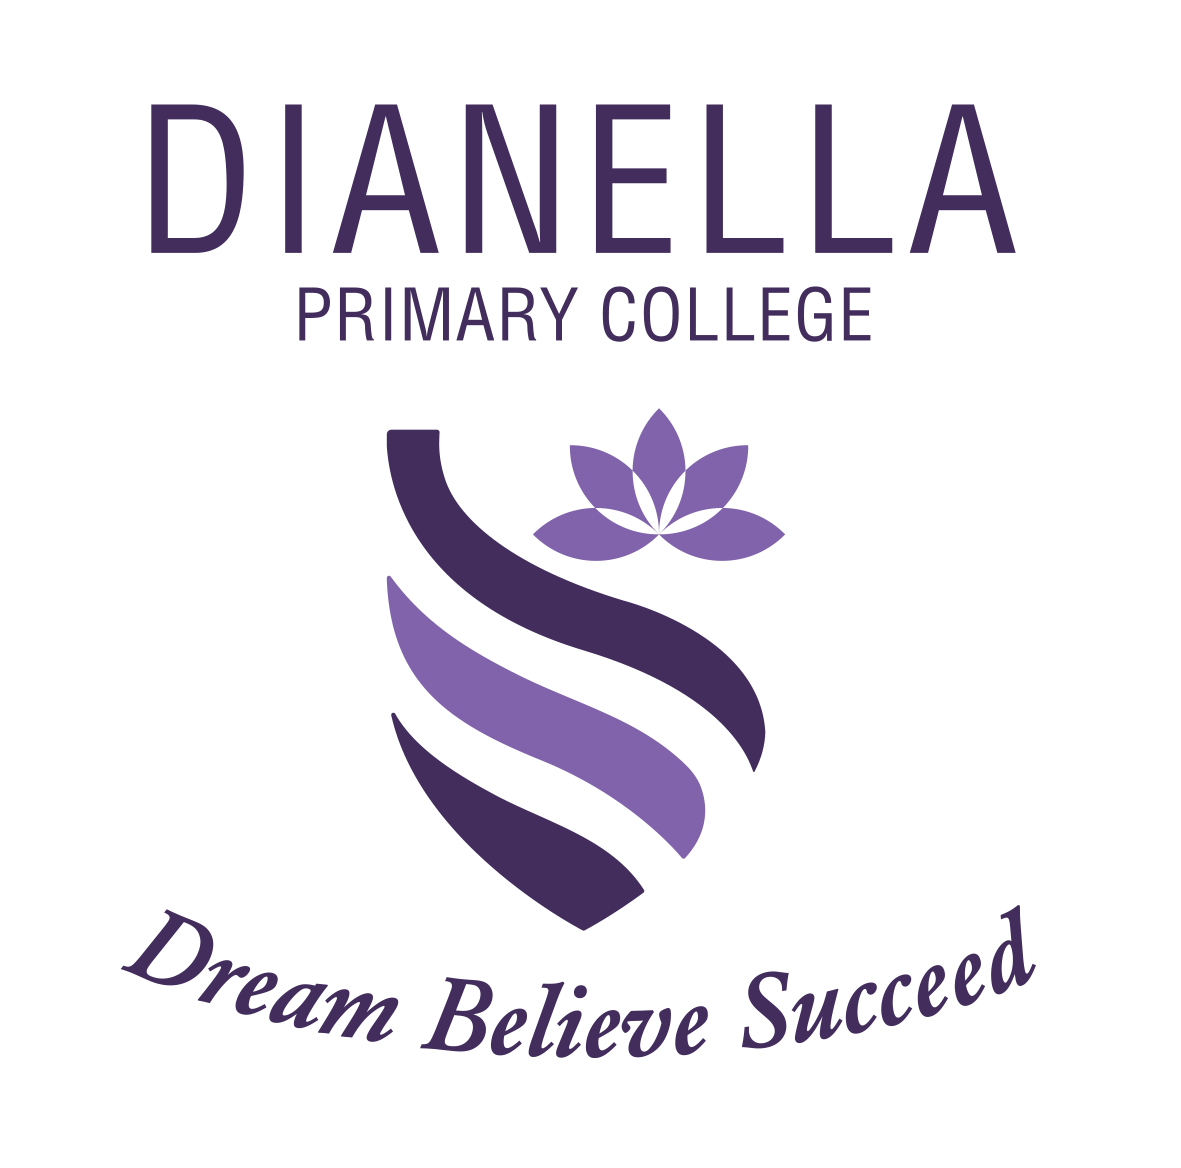 Dianella Primary College